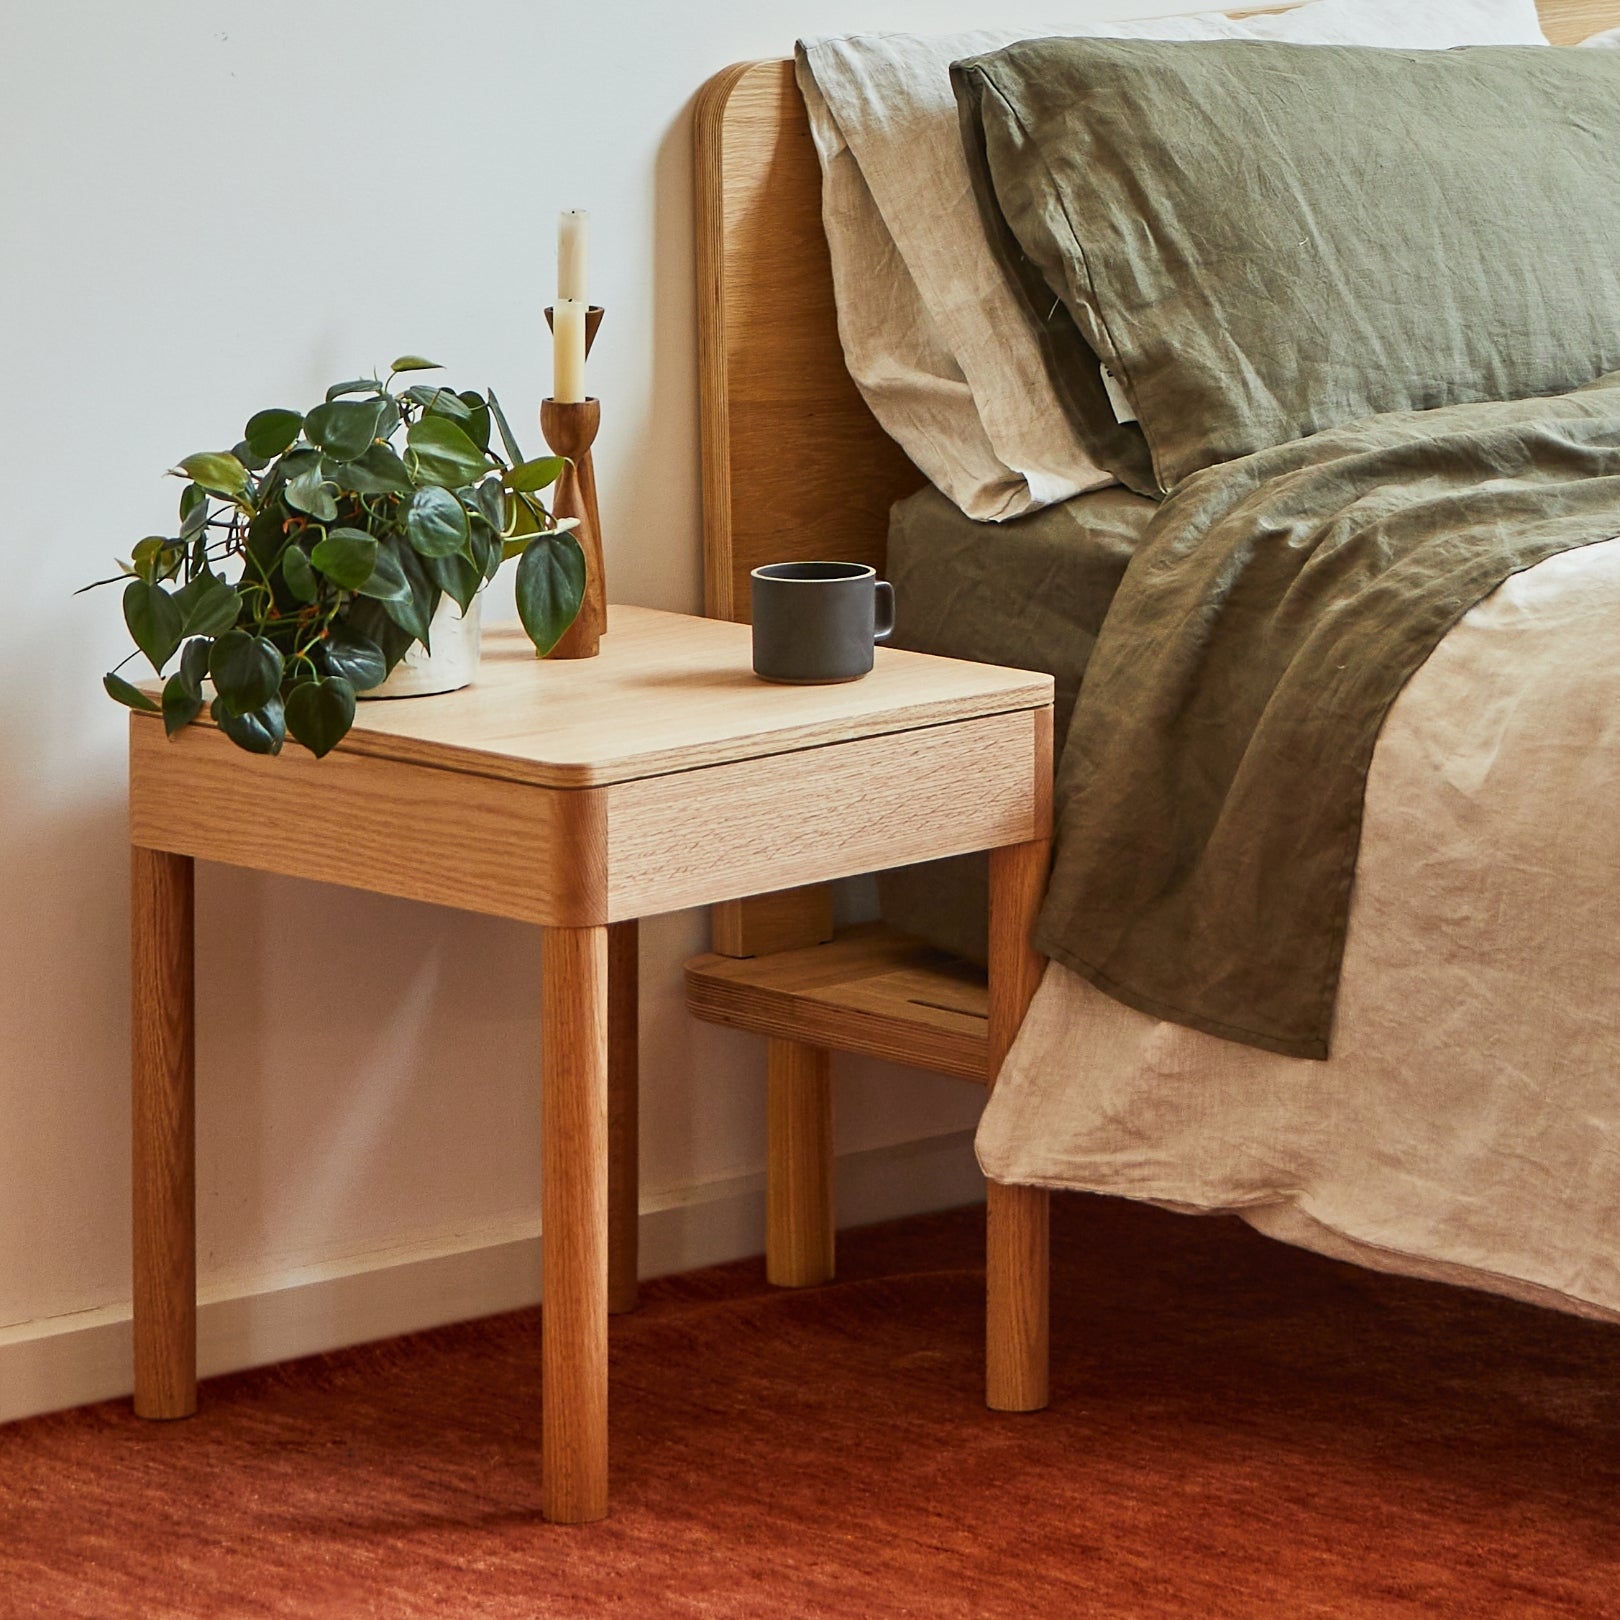 Solid Timber Bedside Table, Wooden Sidetable for Bedroom & Living Room